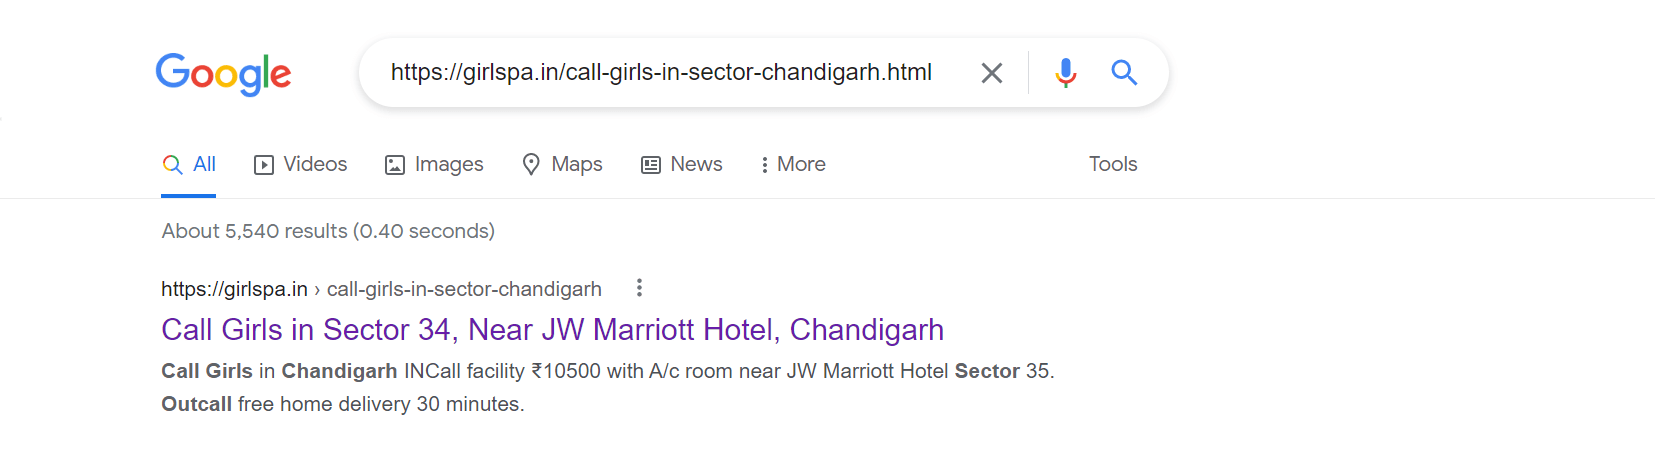 Call Girl In Chandigarh